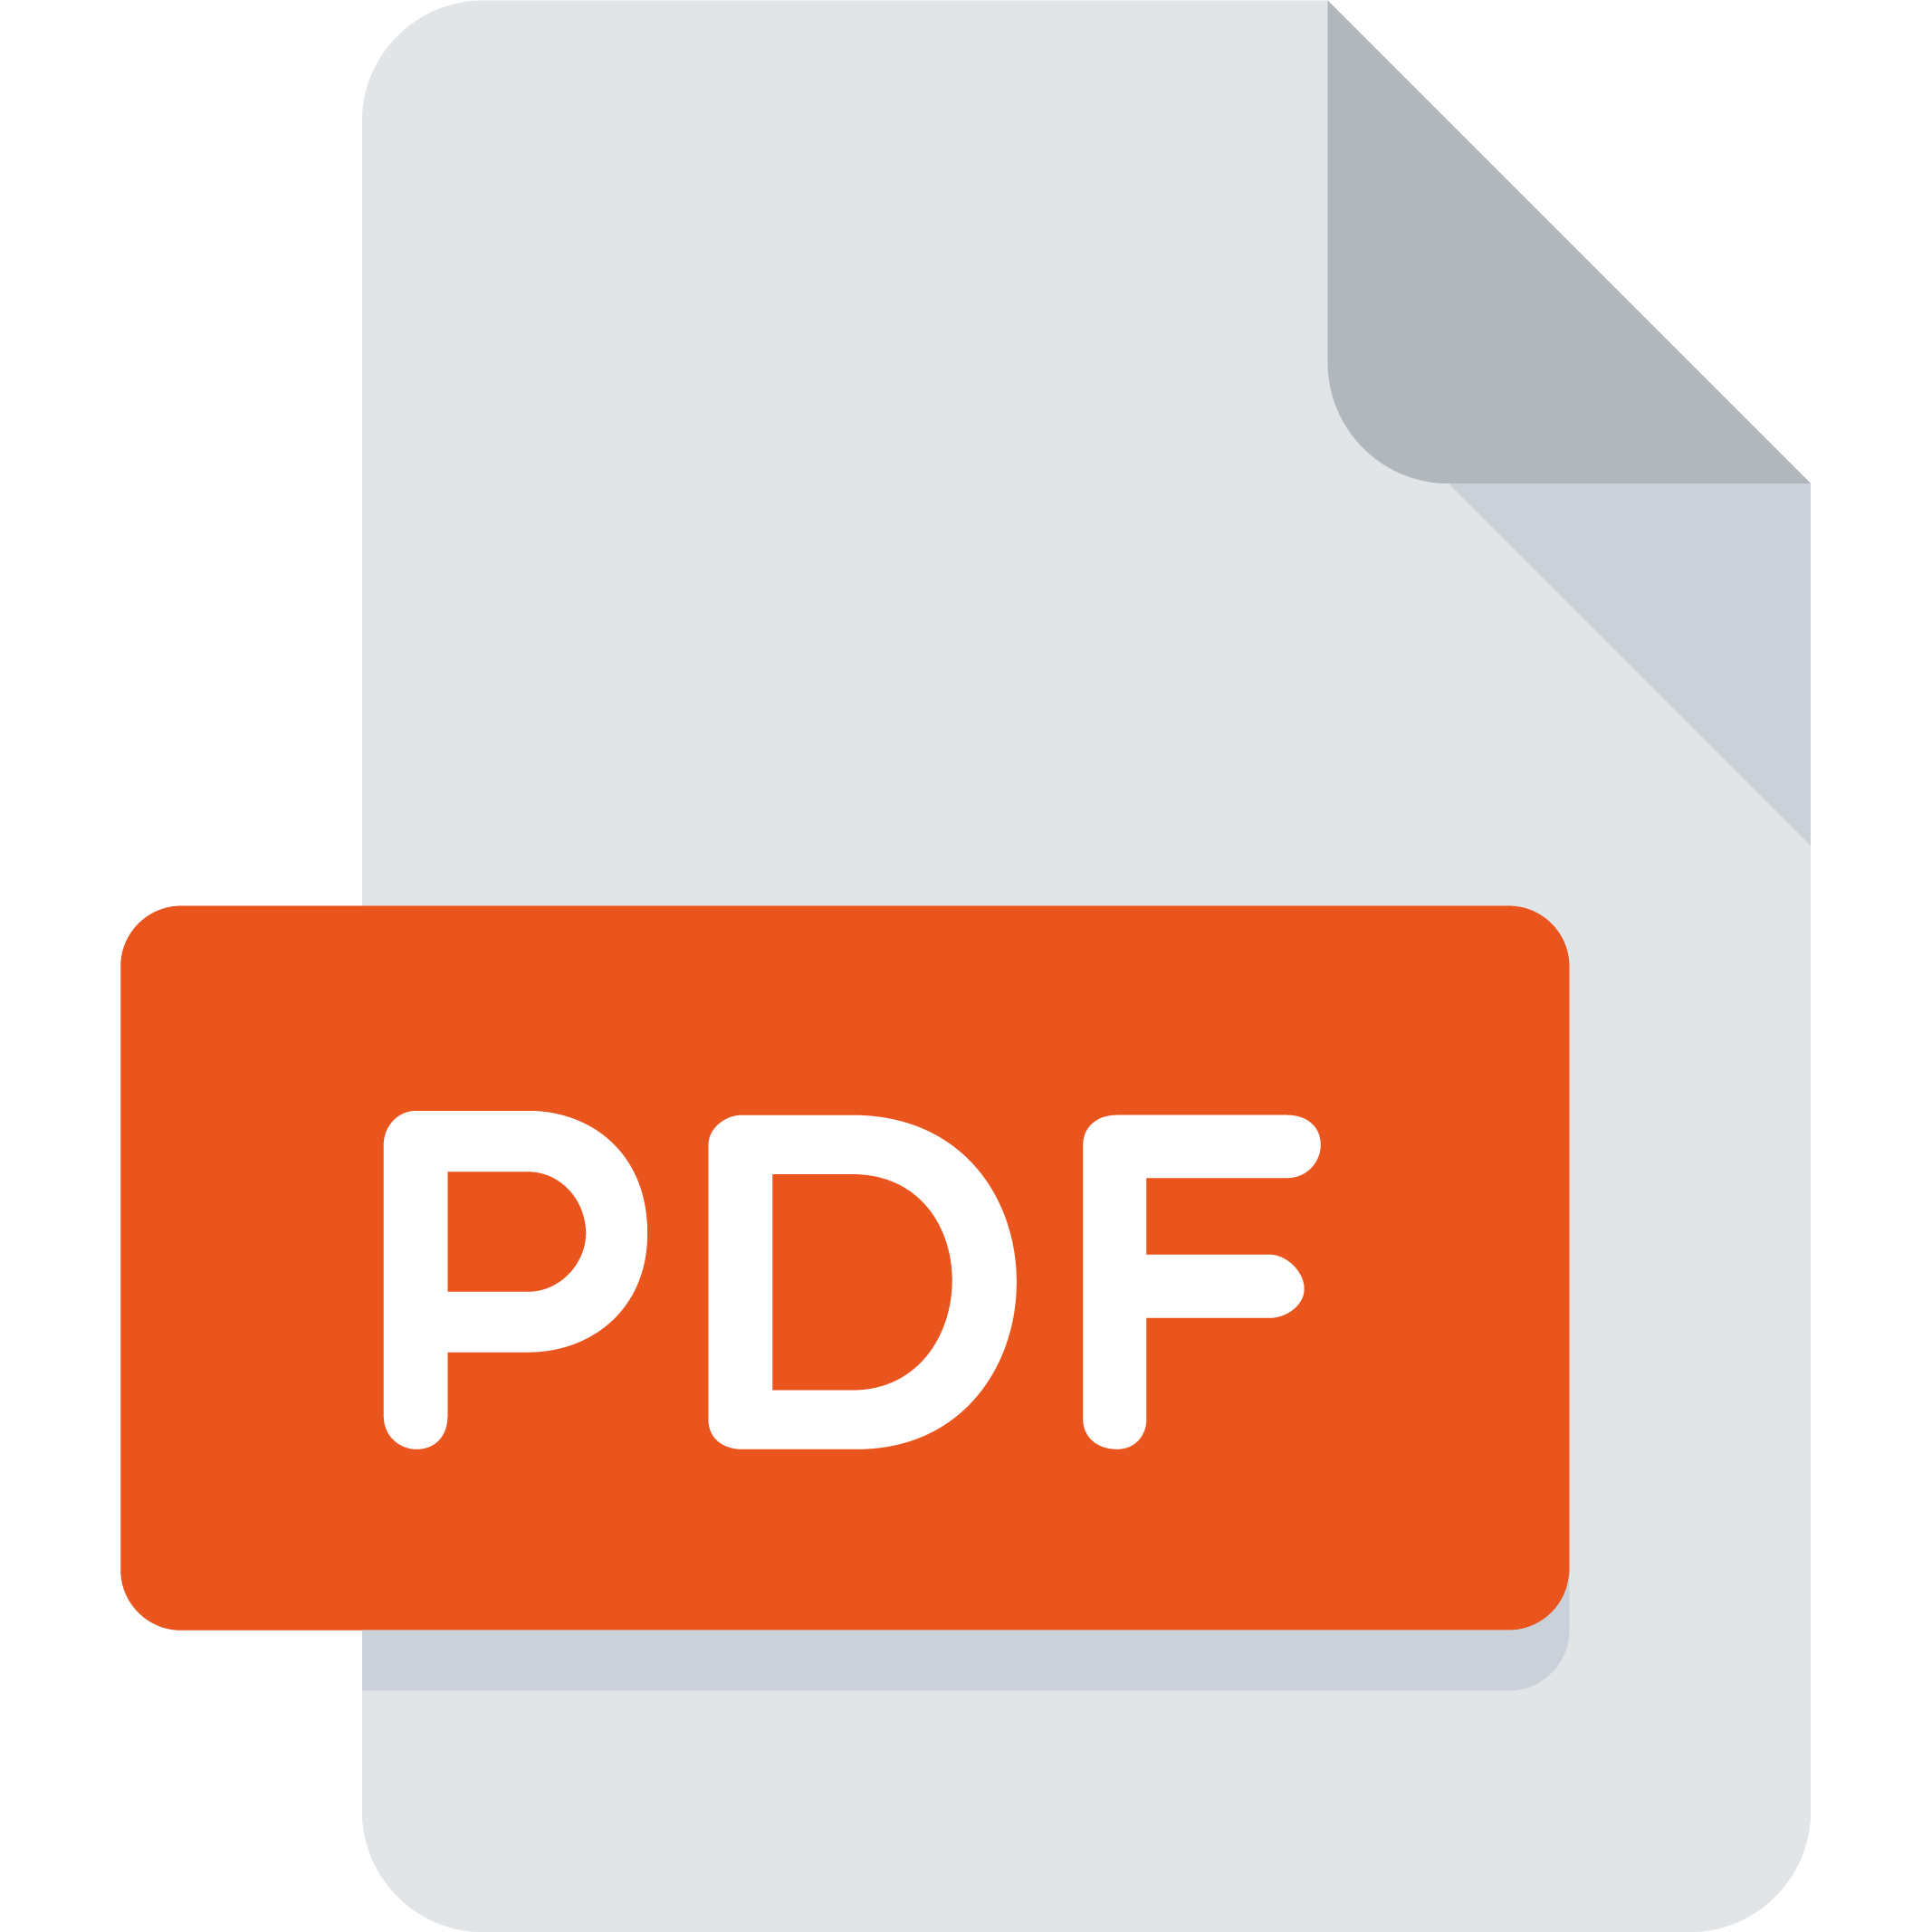 PDF Logo - Kisspng Pdf Computer Icons Encapsulated Postscript Logo Pdf